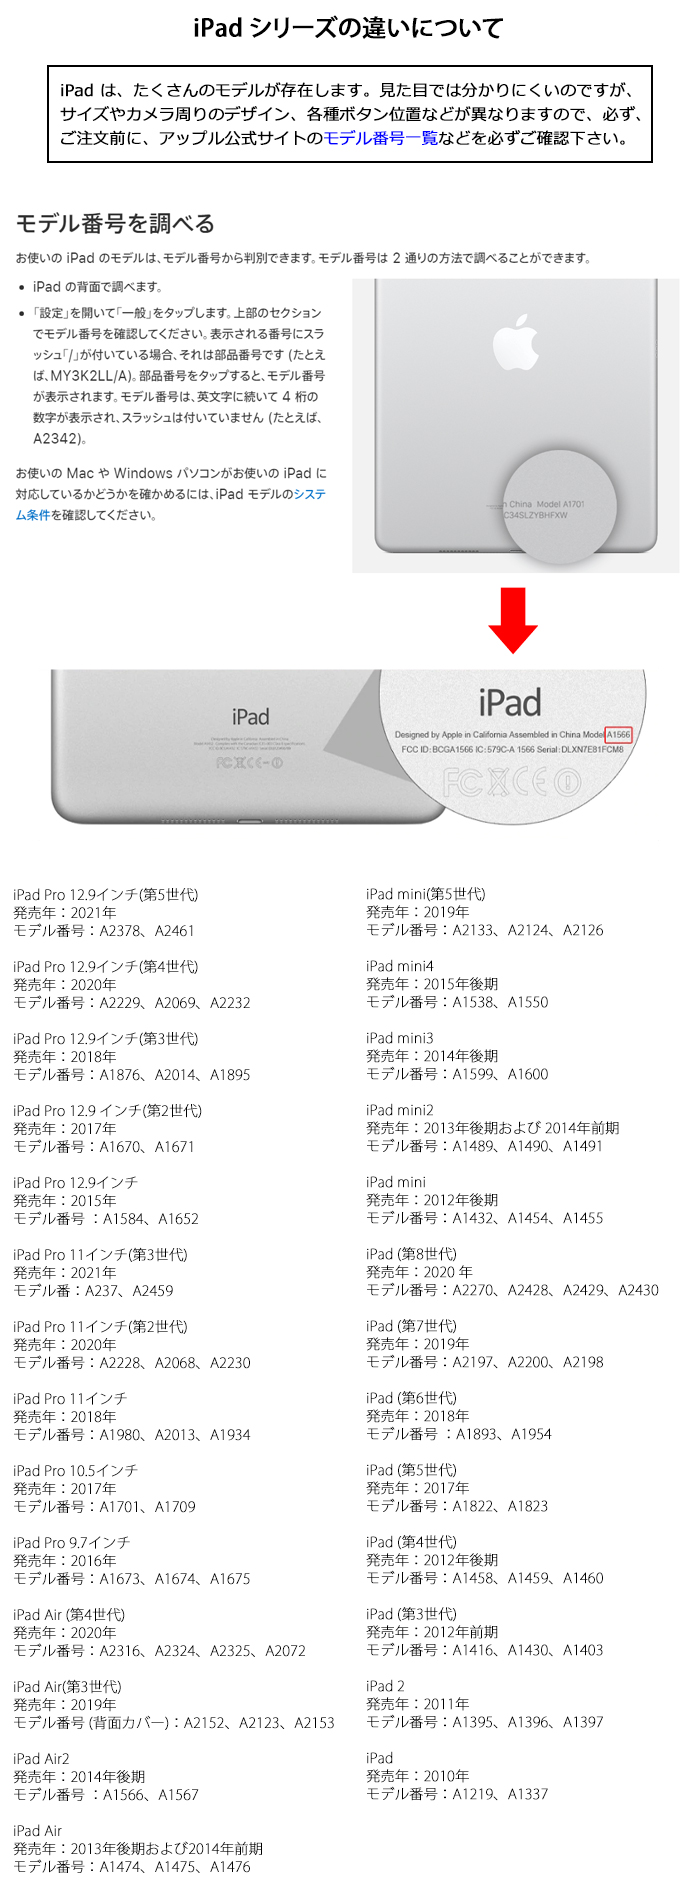 iPad Air2 Pro キーボード ケース iPadAir2ケース iPadProケース iPadAir2キーボード iPadProキーボード LED バックライト